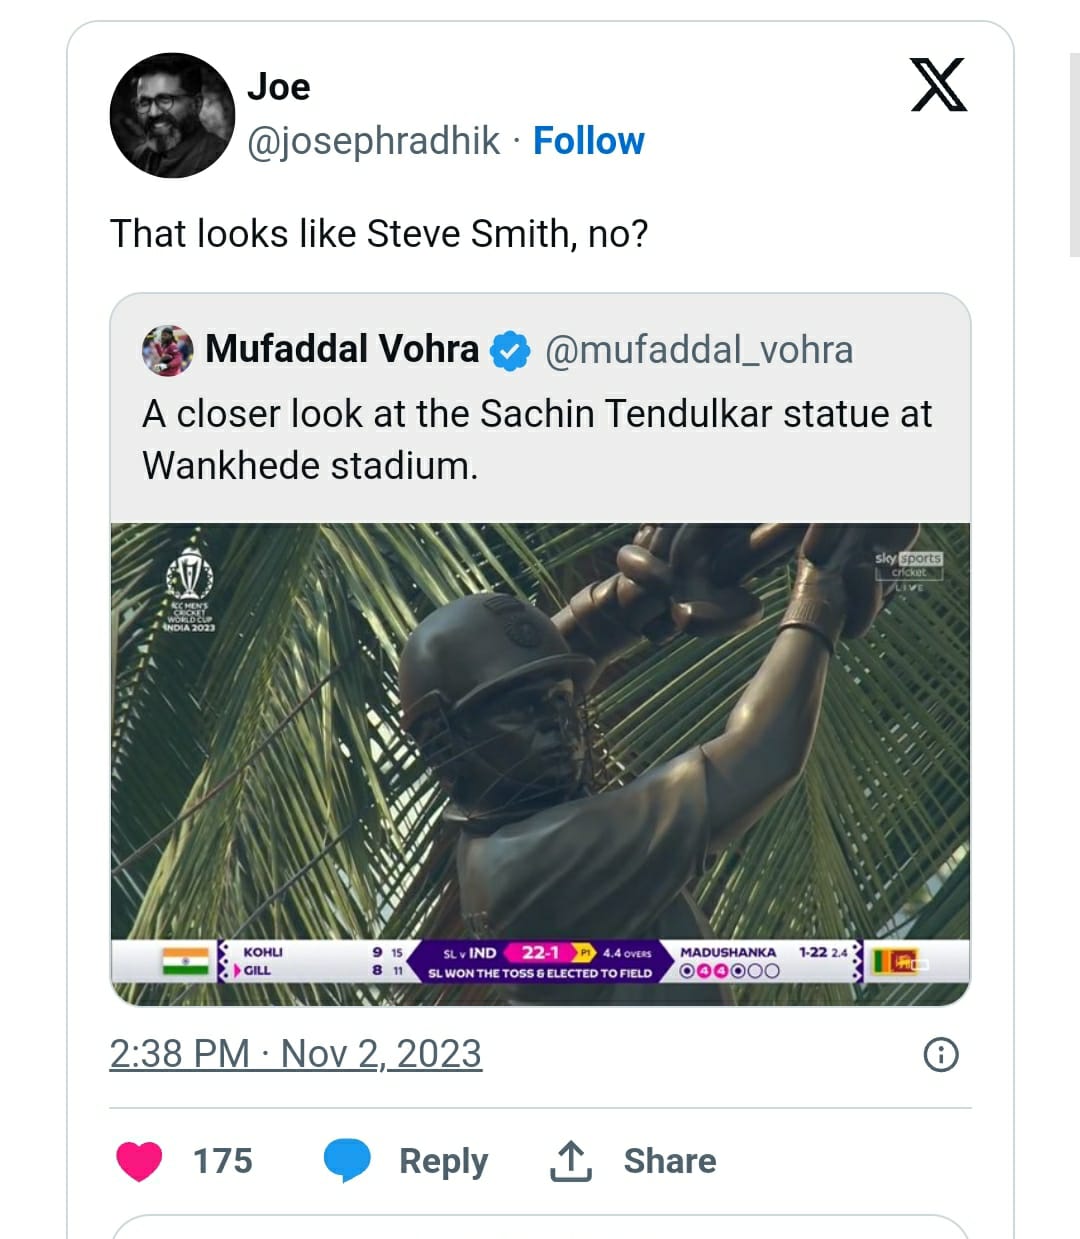 "That's Steve Smith" - Funny Memes On Sachin Tendulkar's Statue At Wankhede